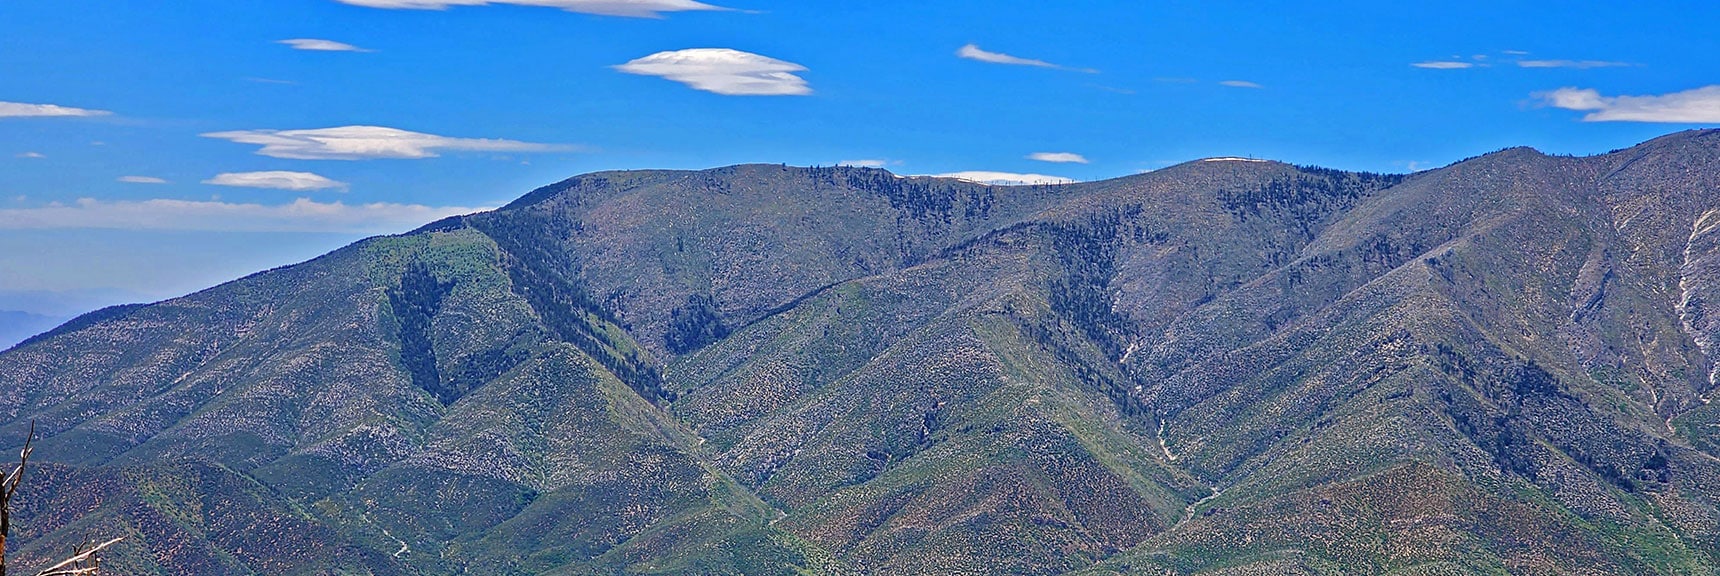 Lower Sexton Ridge Along with Approach Ridges. | Wilson Ridge South High Point | Lovell Canyon, Nevada